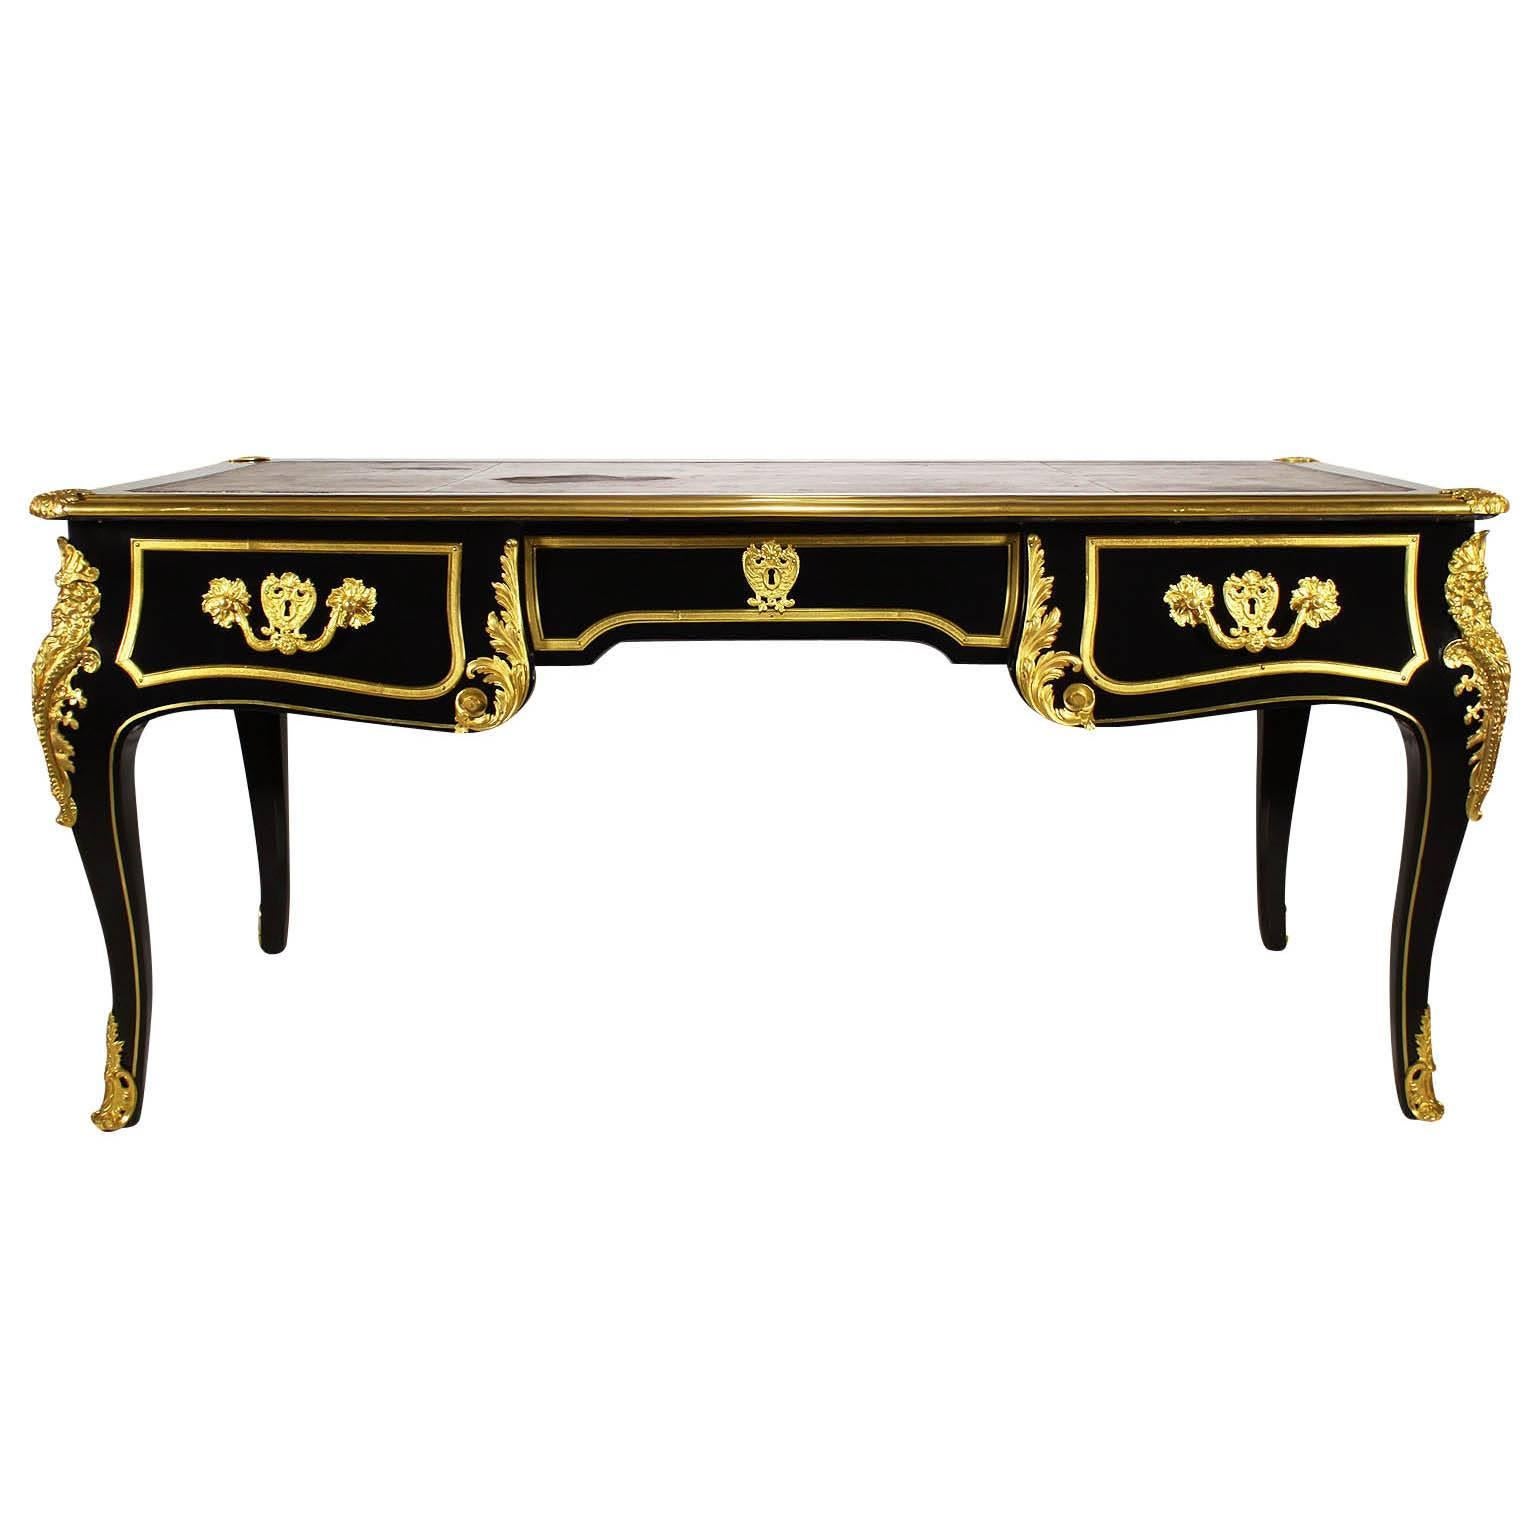 French 19th Century Louis XV Style Ebonized Wood and Gilt Bronze-Mounted Desk